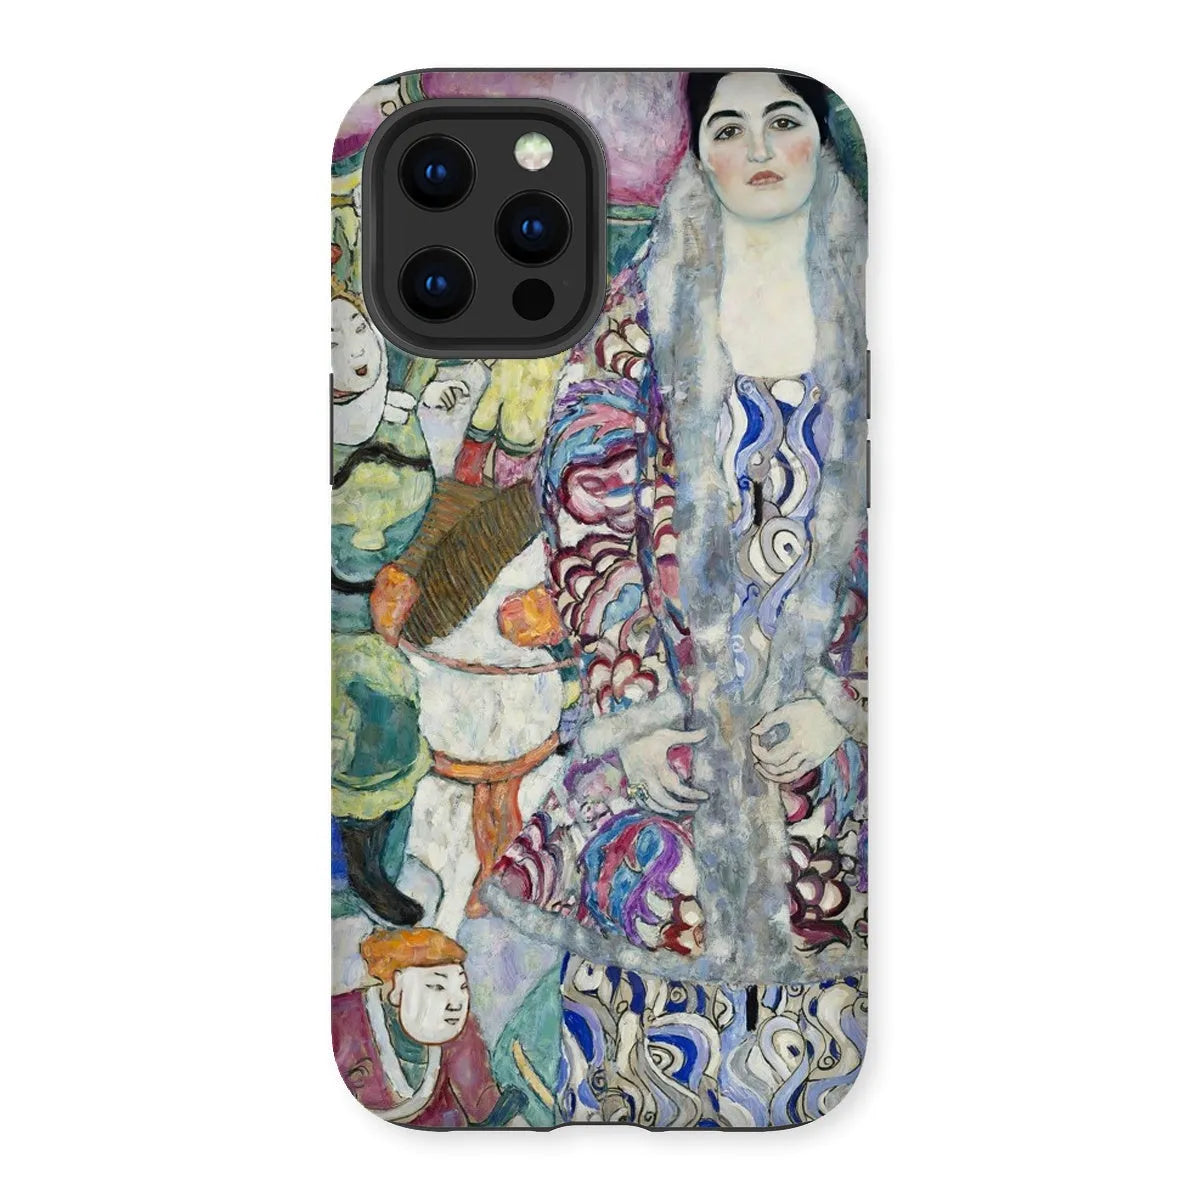 Friederike Maria Beer - Viennese Art Phone Case - Gustav Klimt - Iphone 12 Pro Max / Matte - Mobile Phone Cases